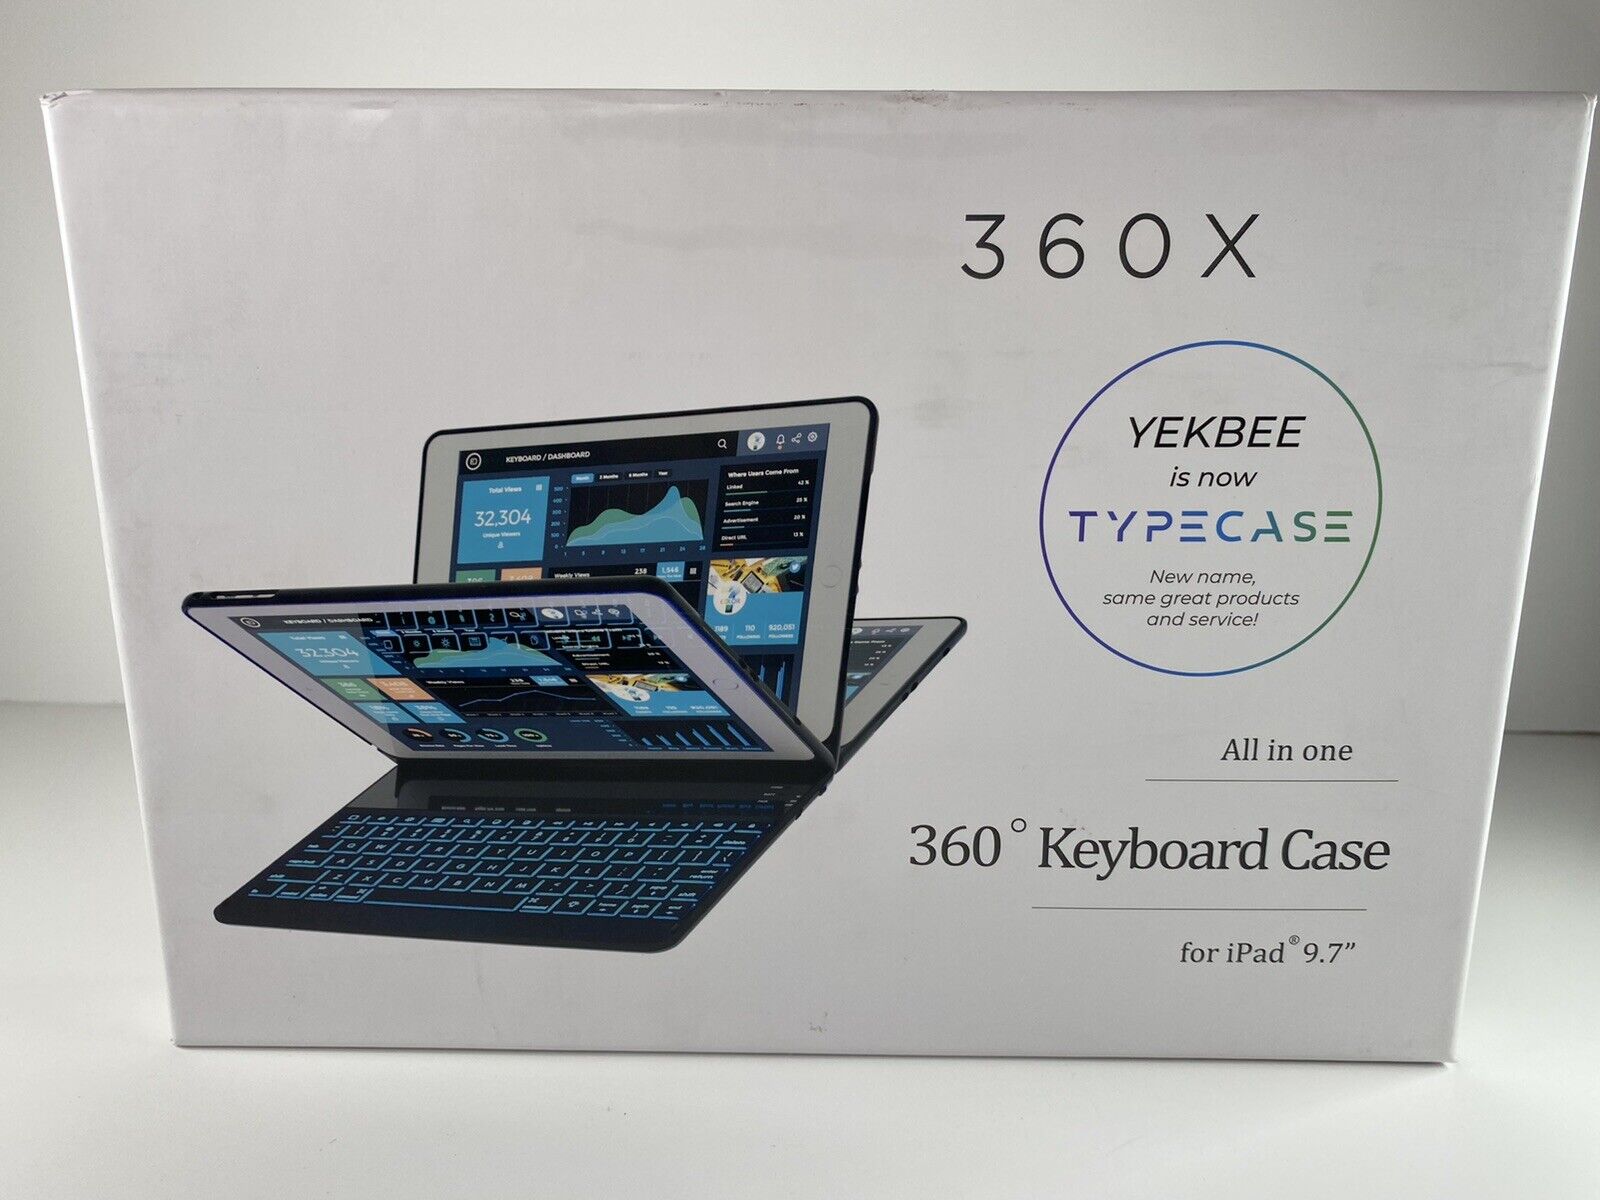 YEKBEE Typecase 360X Wireless 11